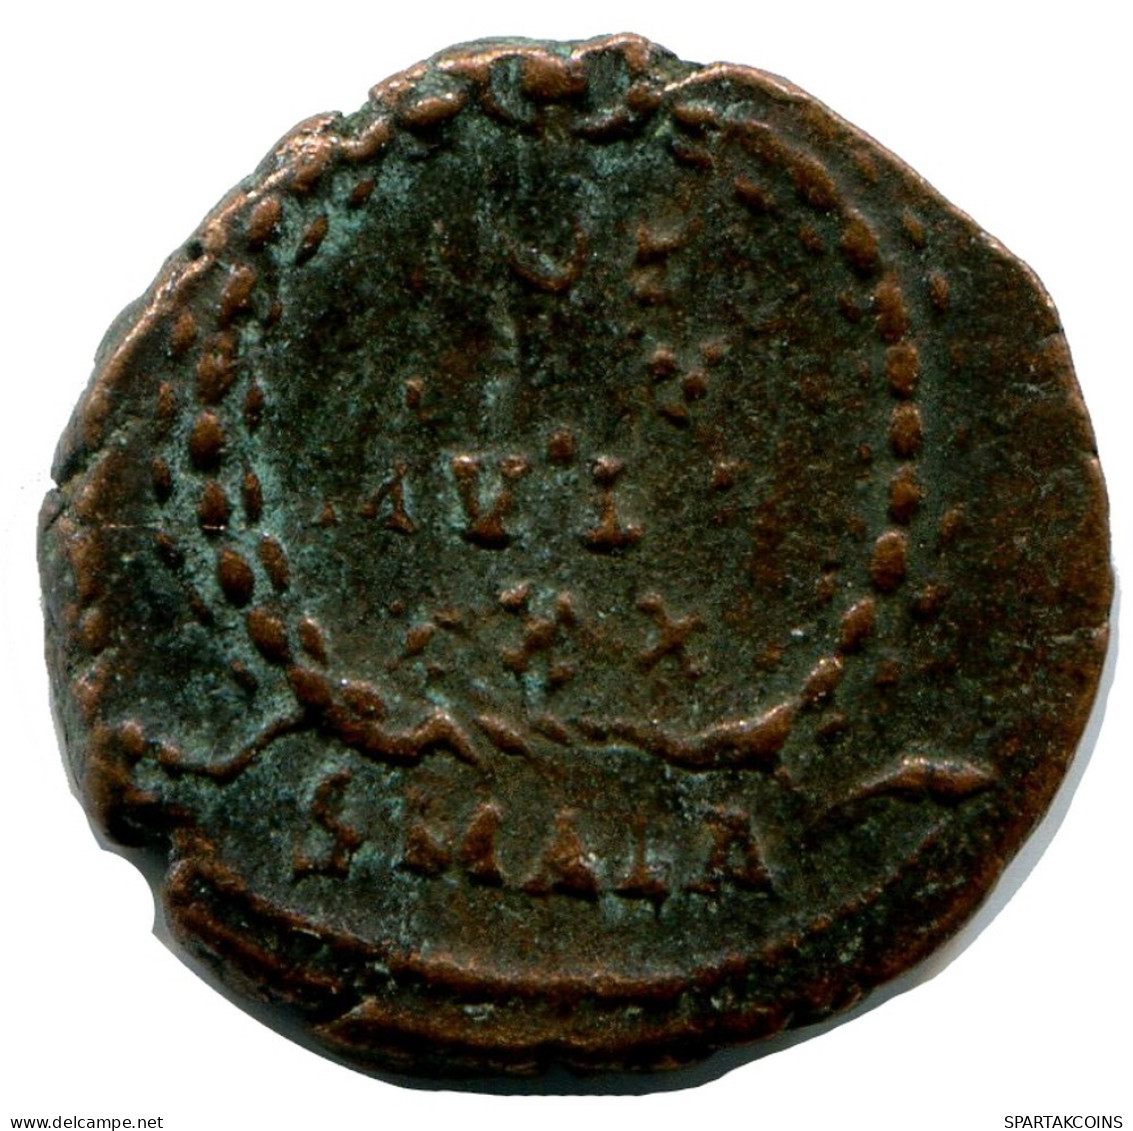 CONSTANTIUS II MINTED IN ALEKSANDRIA FOUND IN IHNASYAH HOARD #ANC10239.14.U.A - El Imperio Christiano (307 / 363)